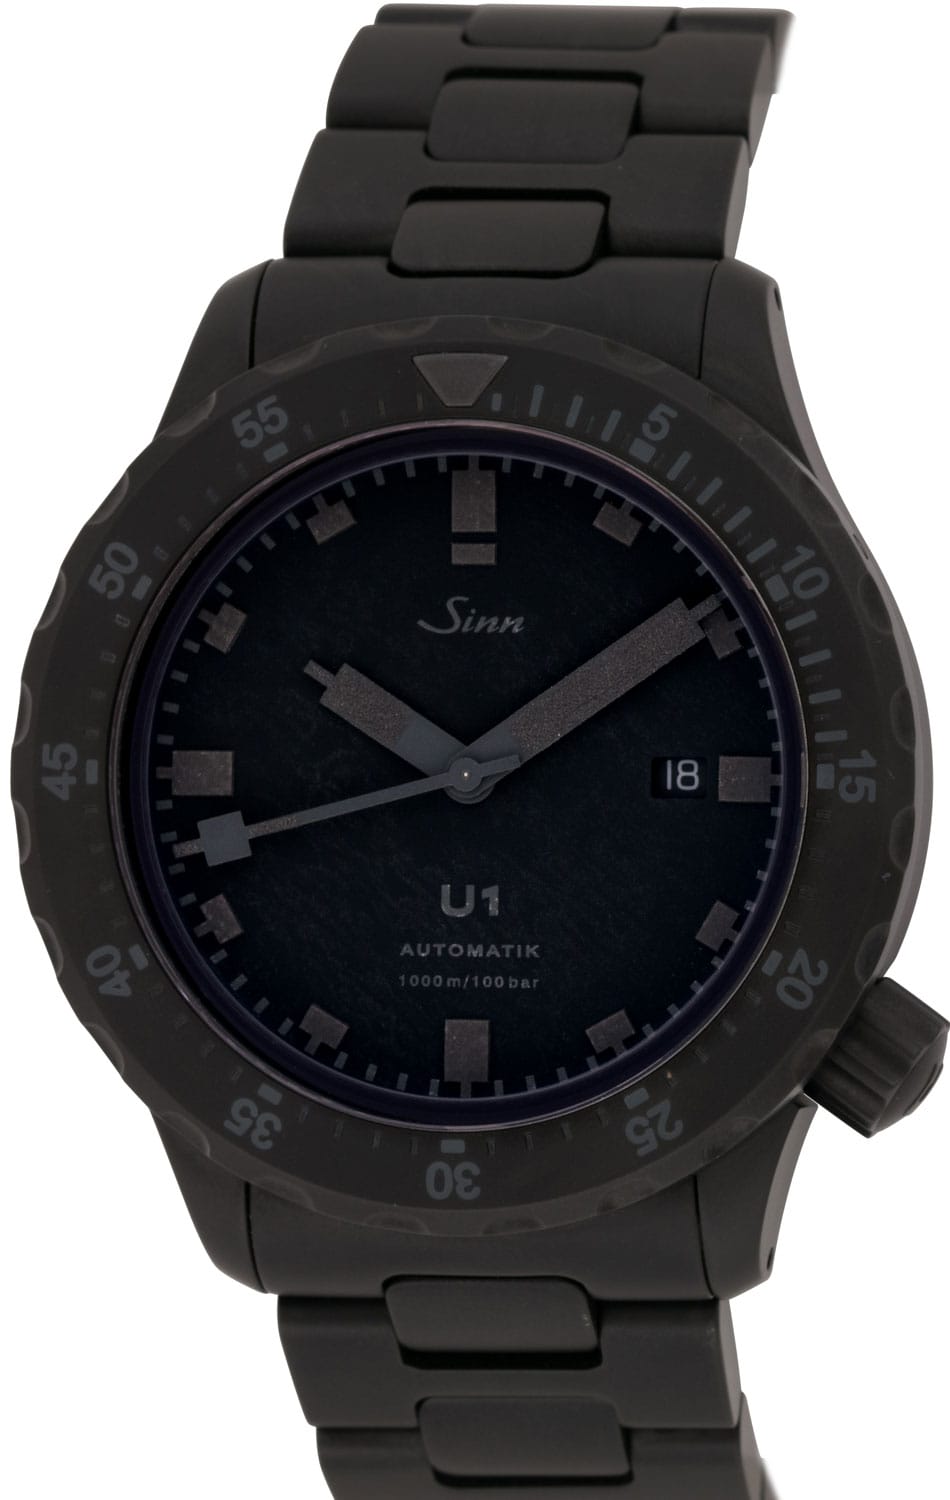 Sinn - U1 Black Limited Edition 'The Hour Glass'